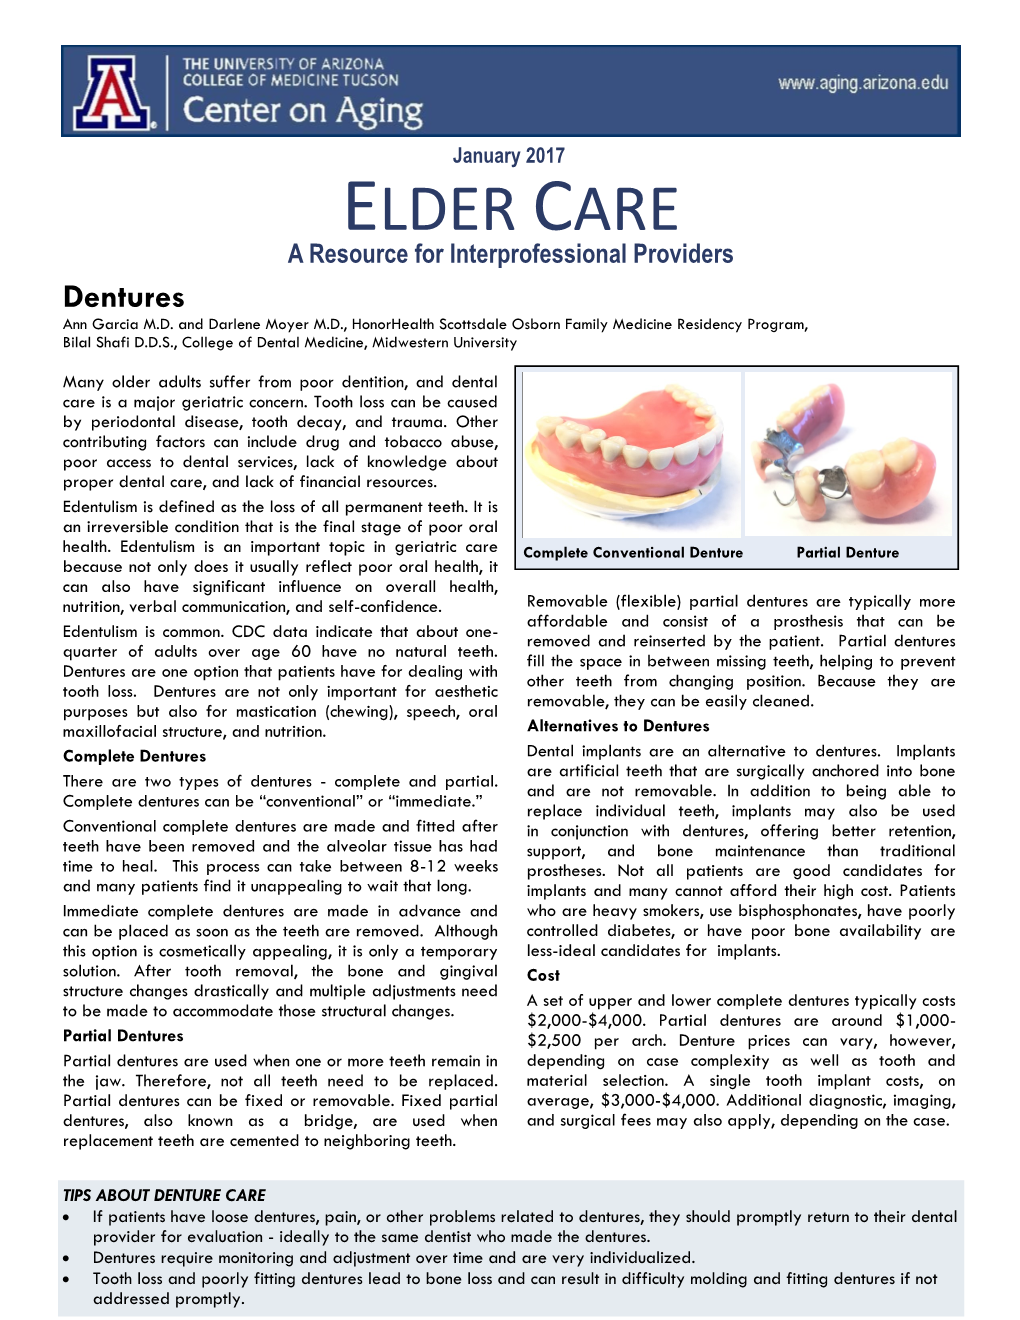 ELDER CARE a Resource for Interprofessional Providers Dentures Ann Garcia M.D